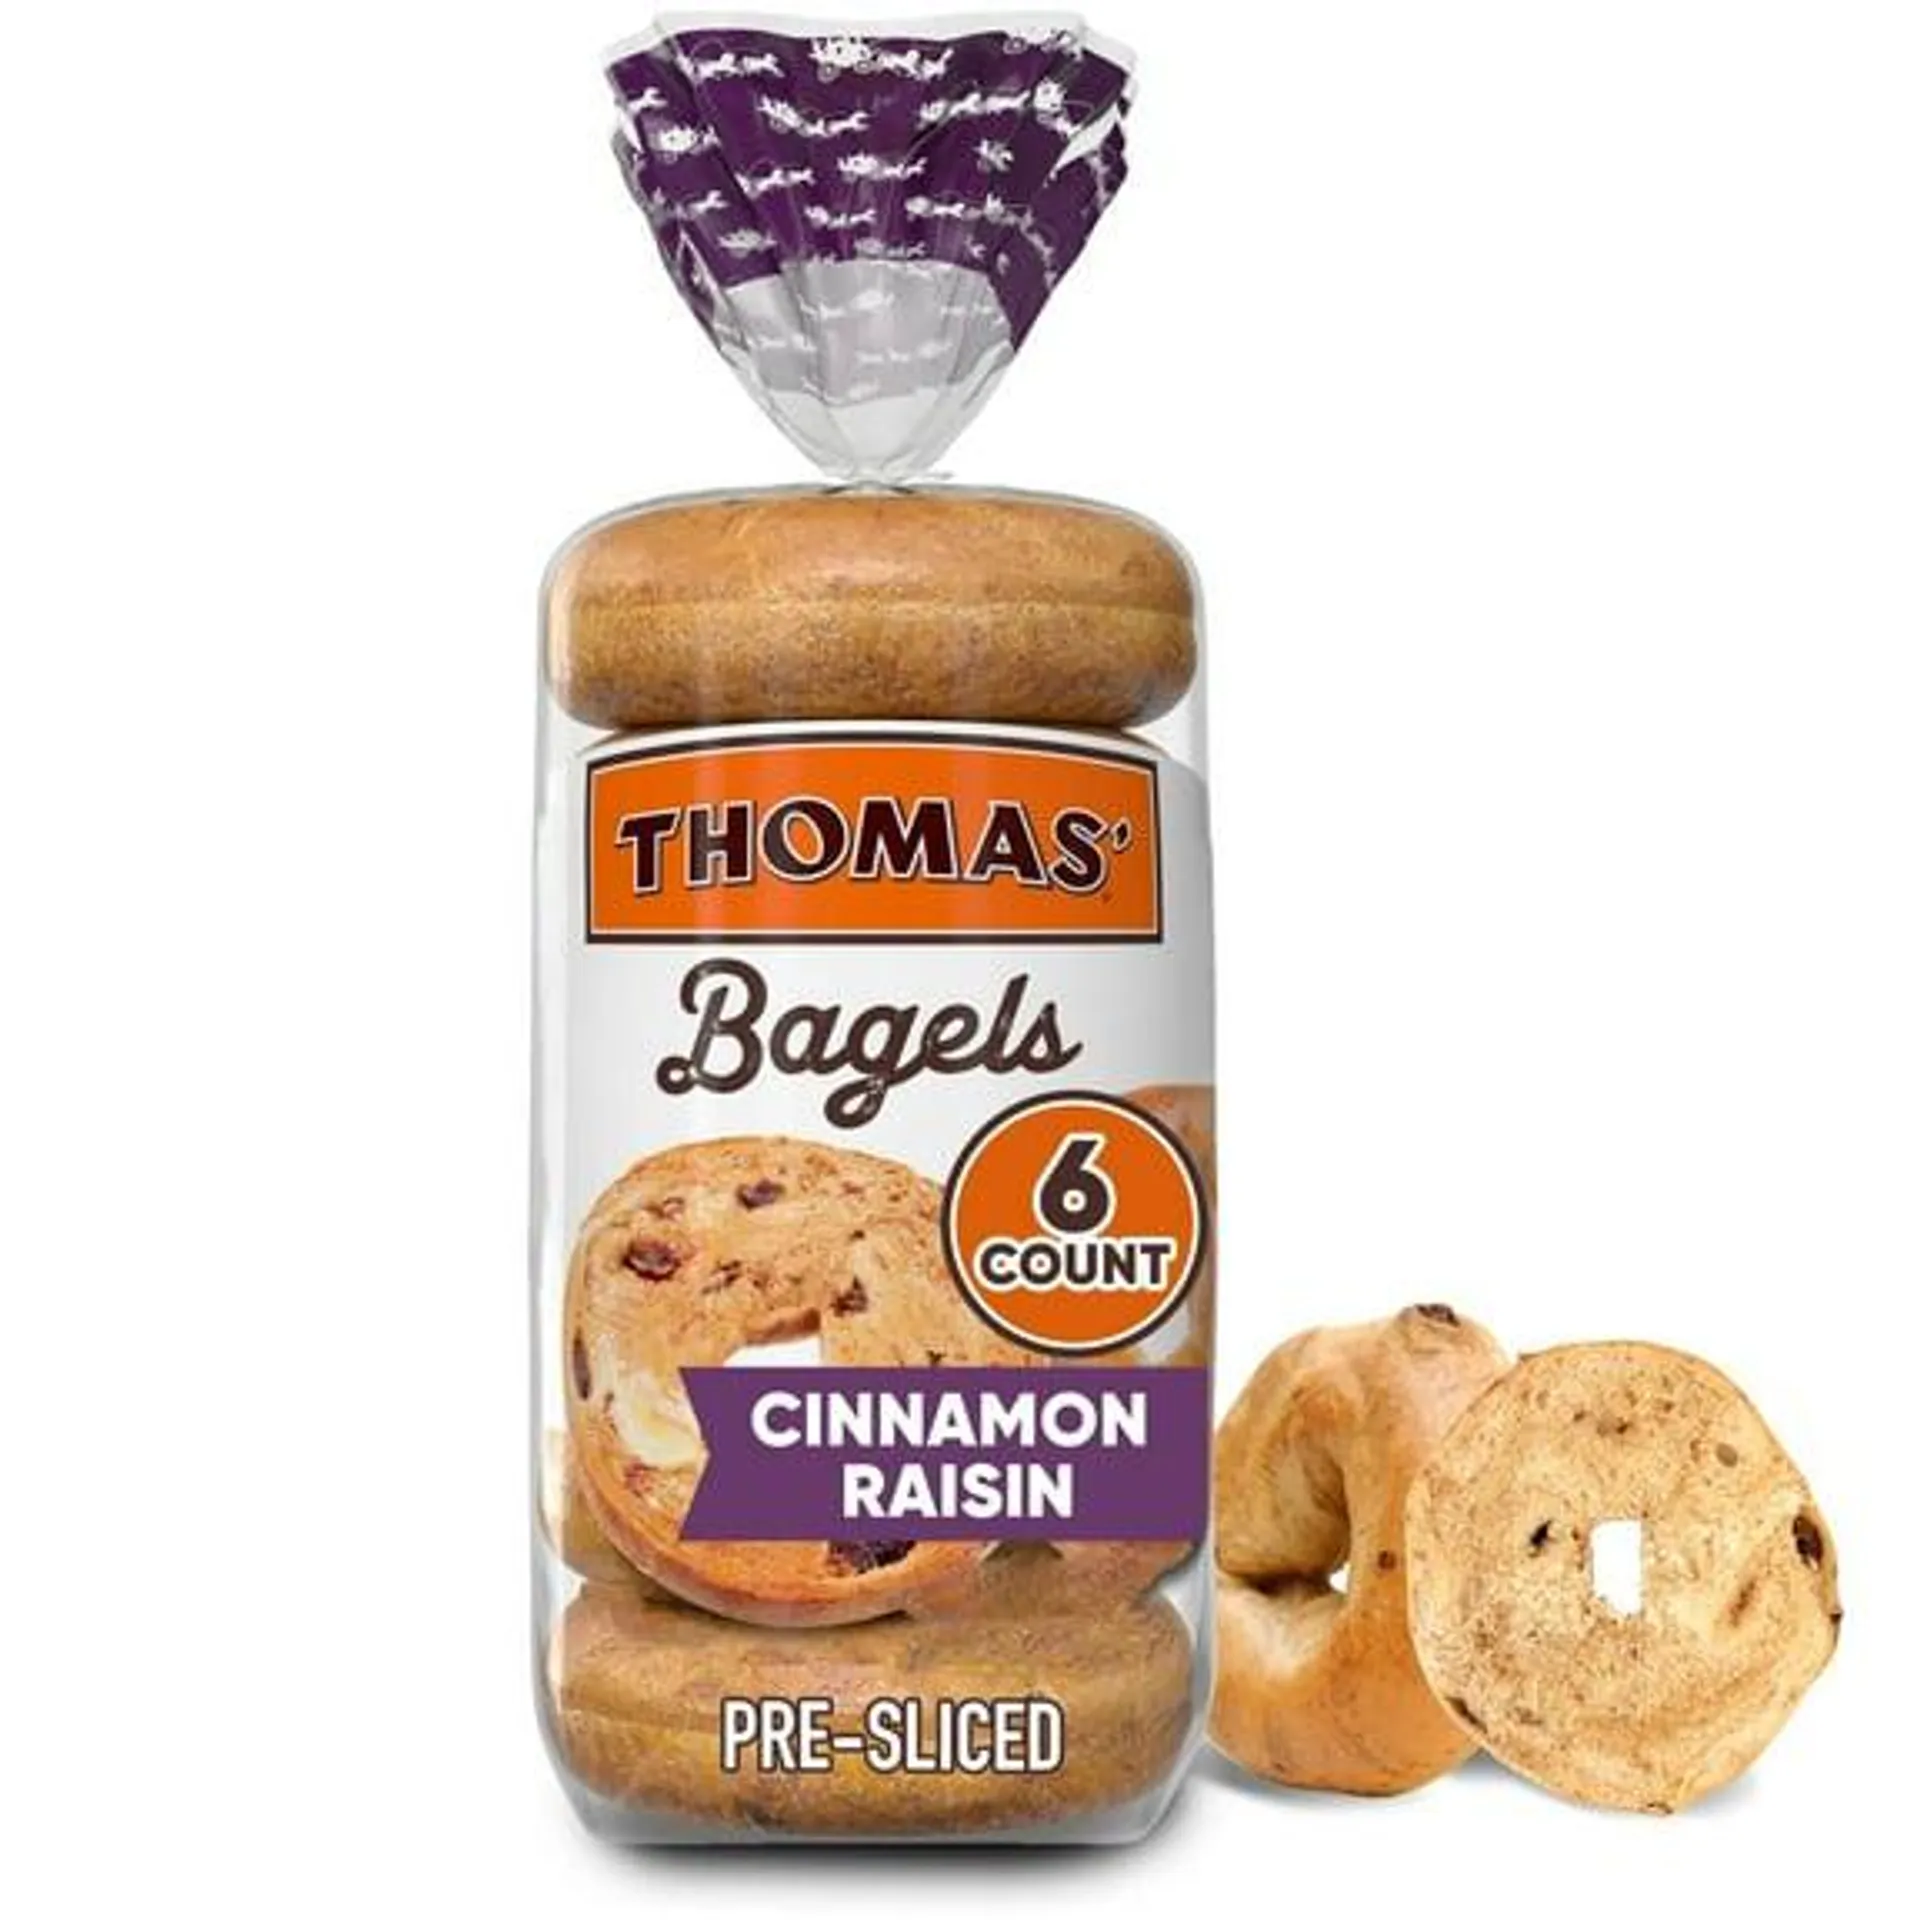 Thomas' Cinnamon Raisin Bagels, 6 Count, 20 oz Bag